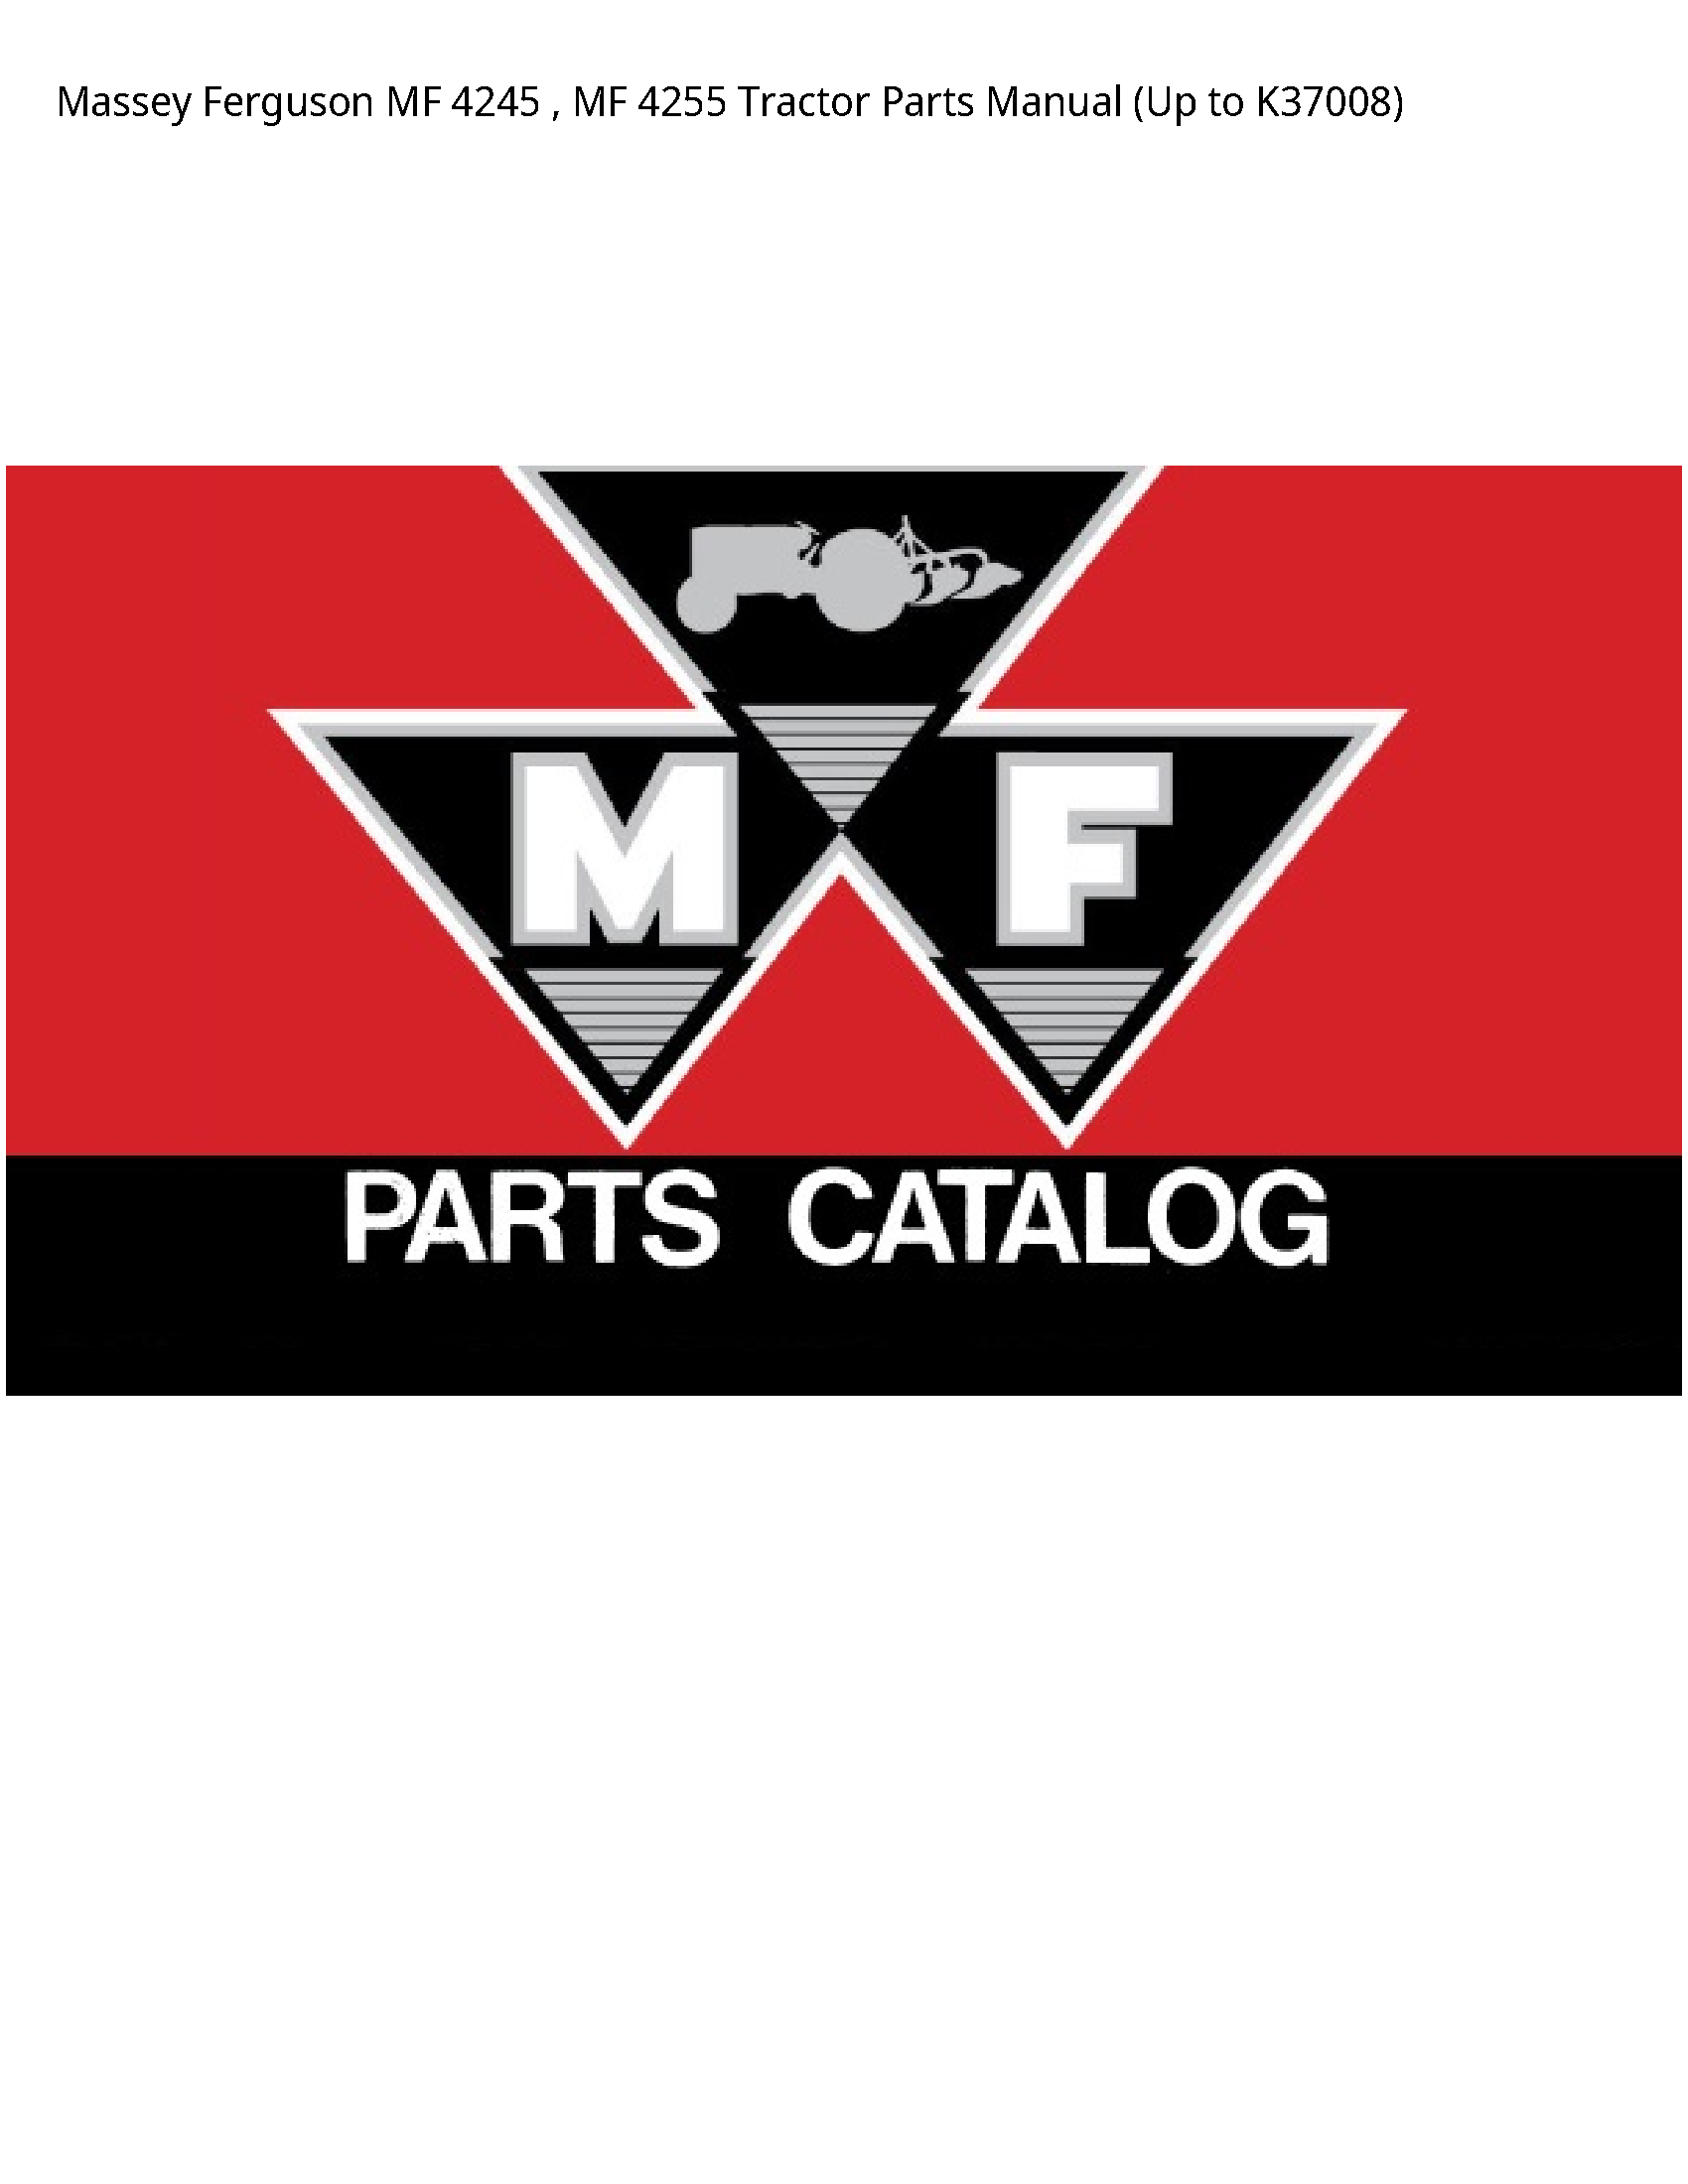 Massey Ferguson 4245 MF MF Tractor Parts manual